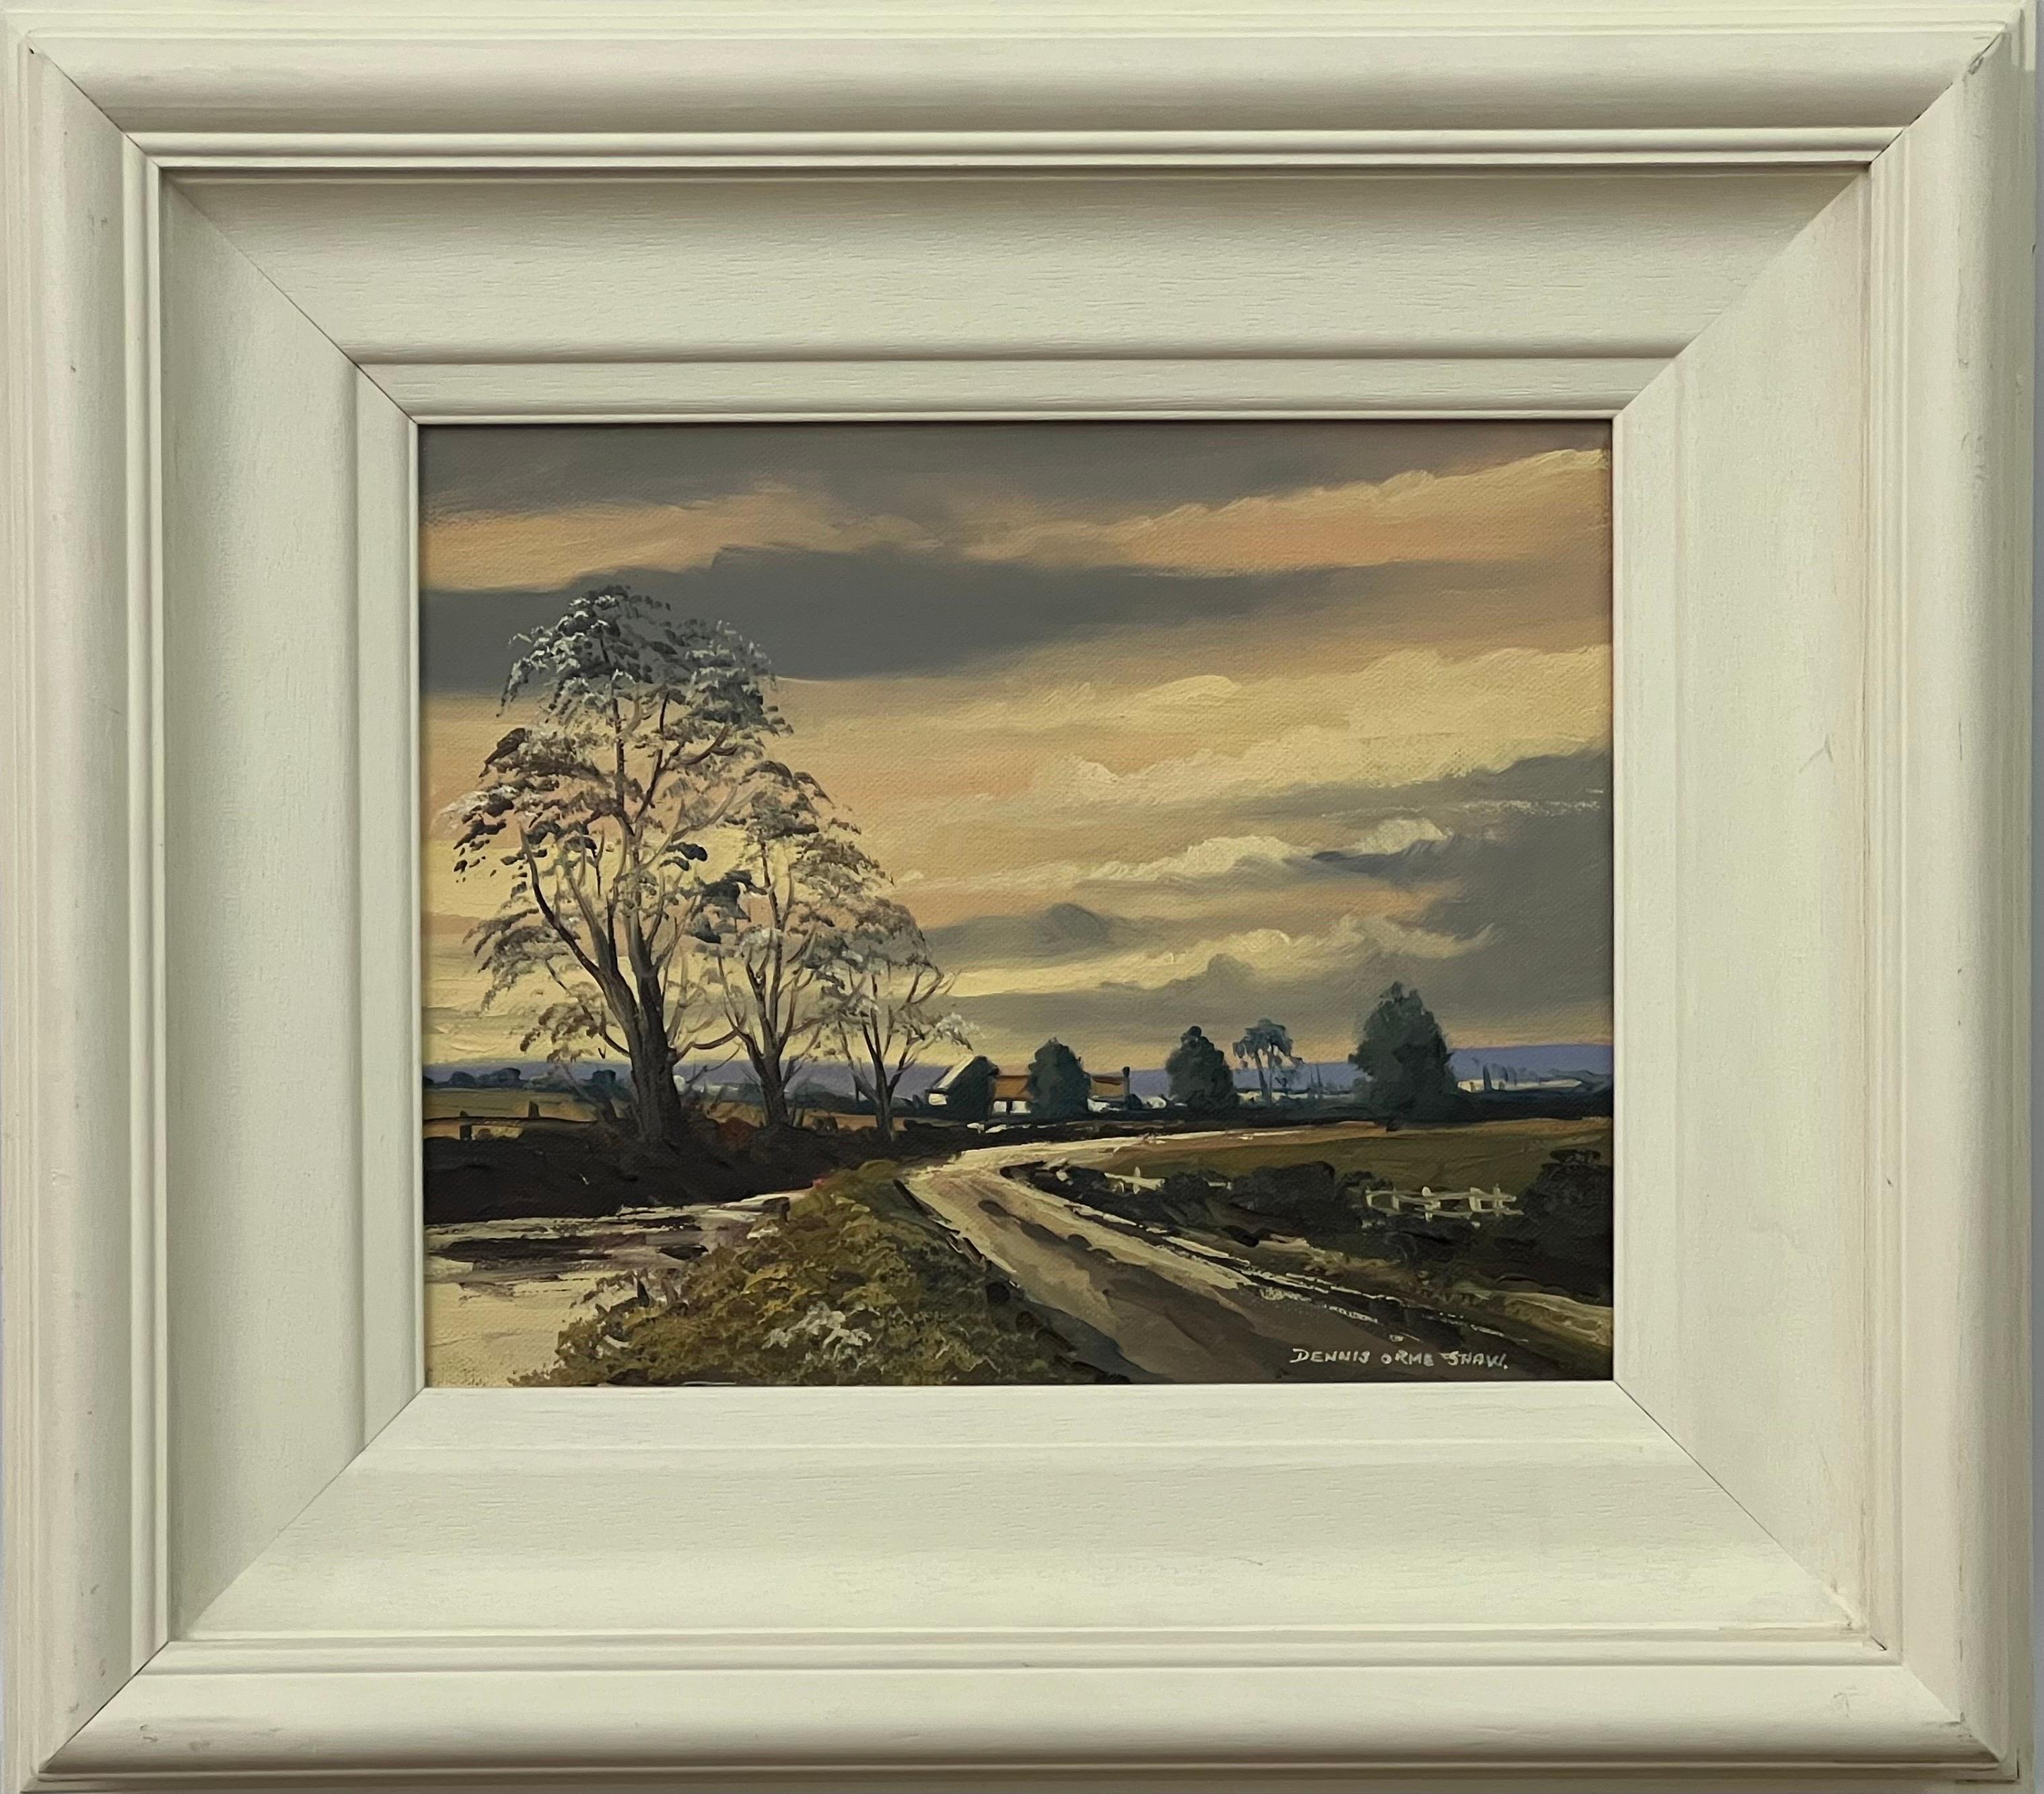 Sunset in Ireland Countryside - Original Oil Painting by Northern Irish Artist